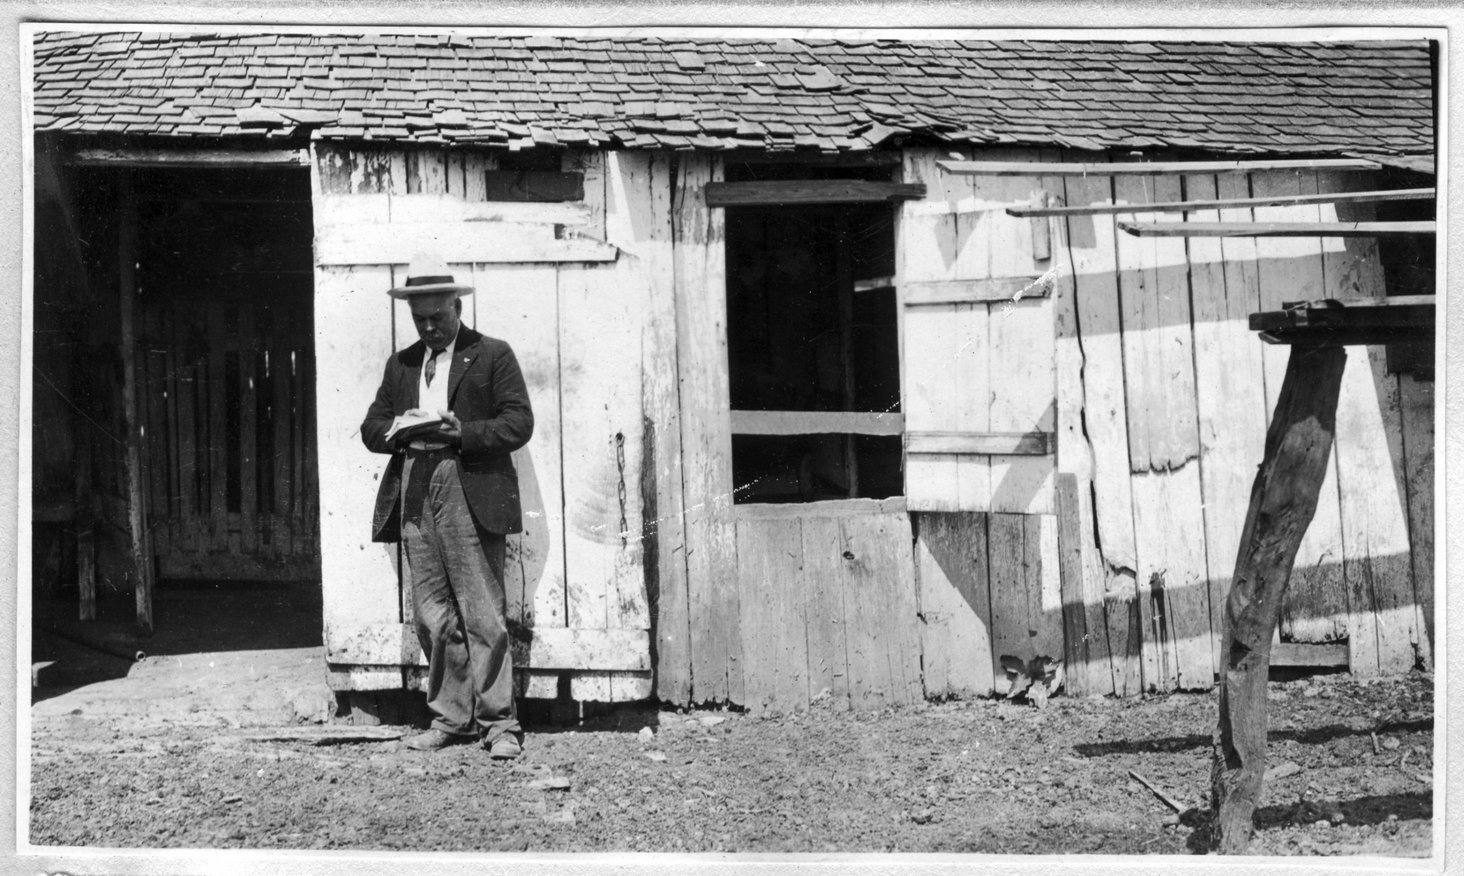 008~O. W. Meador Milk Barn Aug 1920.jpg